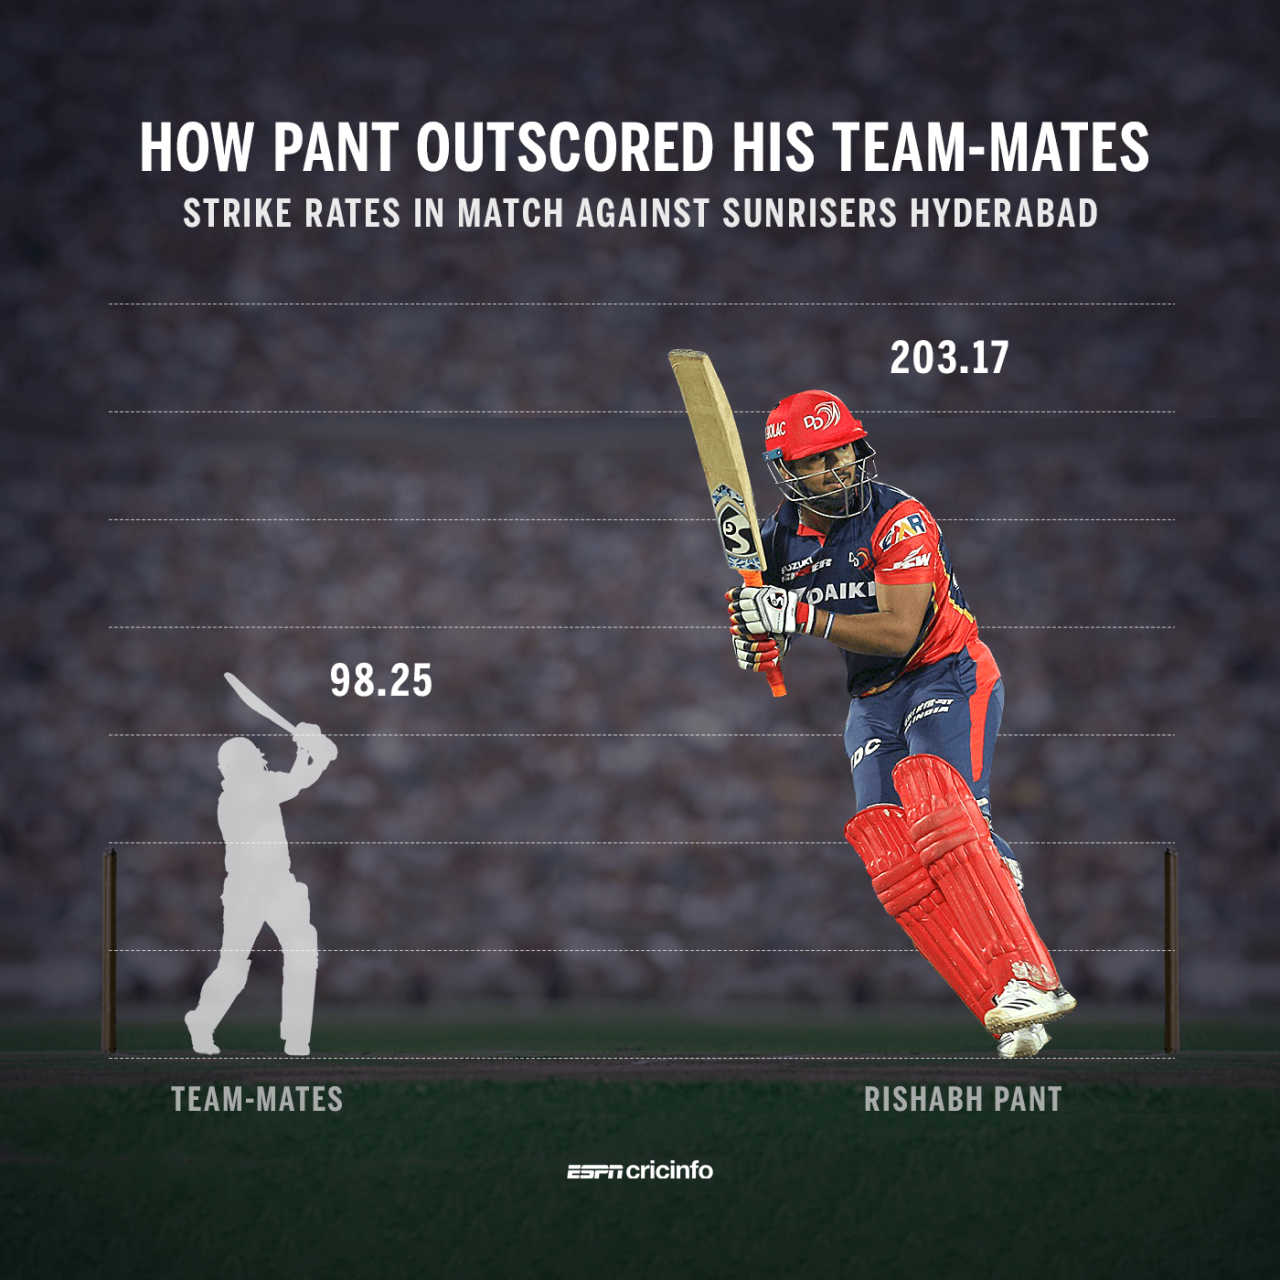 Rishabh Pant scored twice as fast as the rest of Delhi Daredevils' batsmen against Sunrisers Hyderabad, May 10, 2018